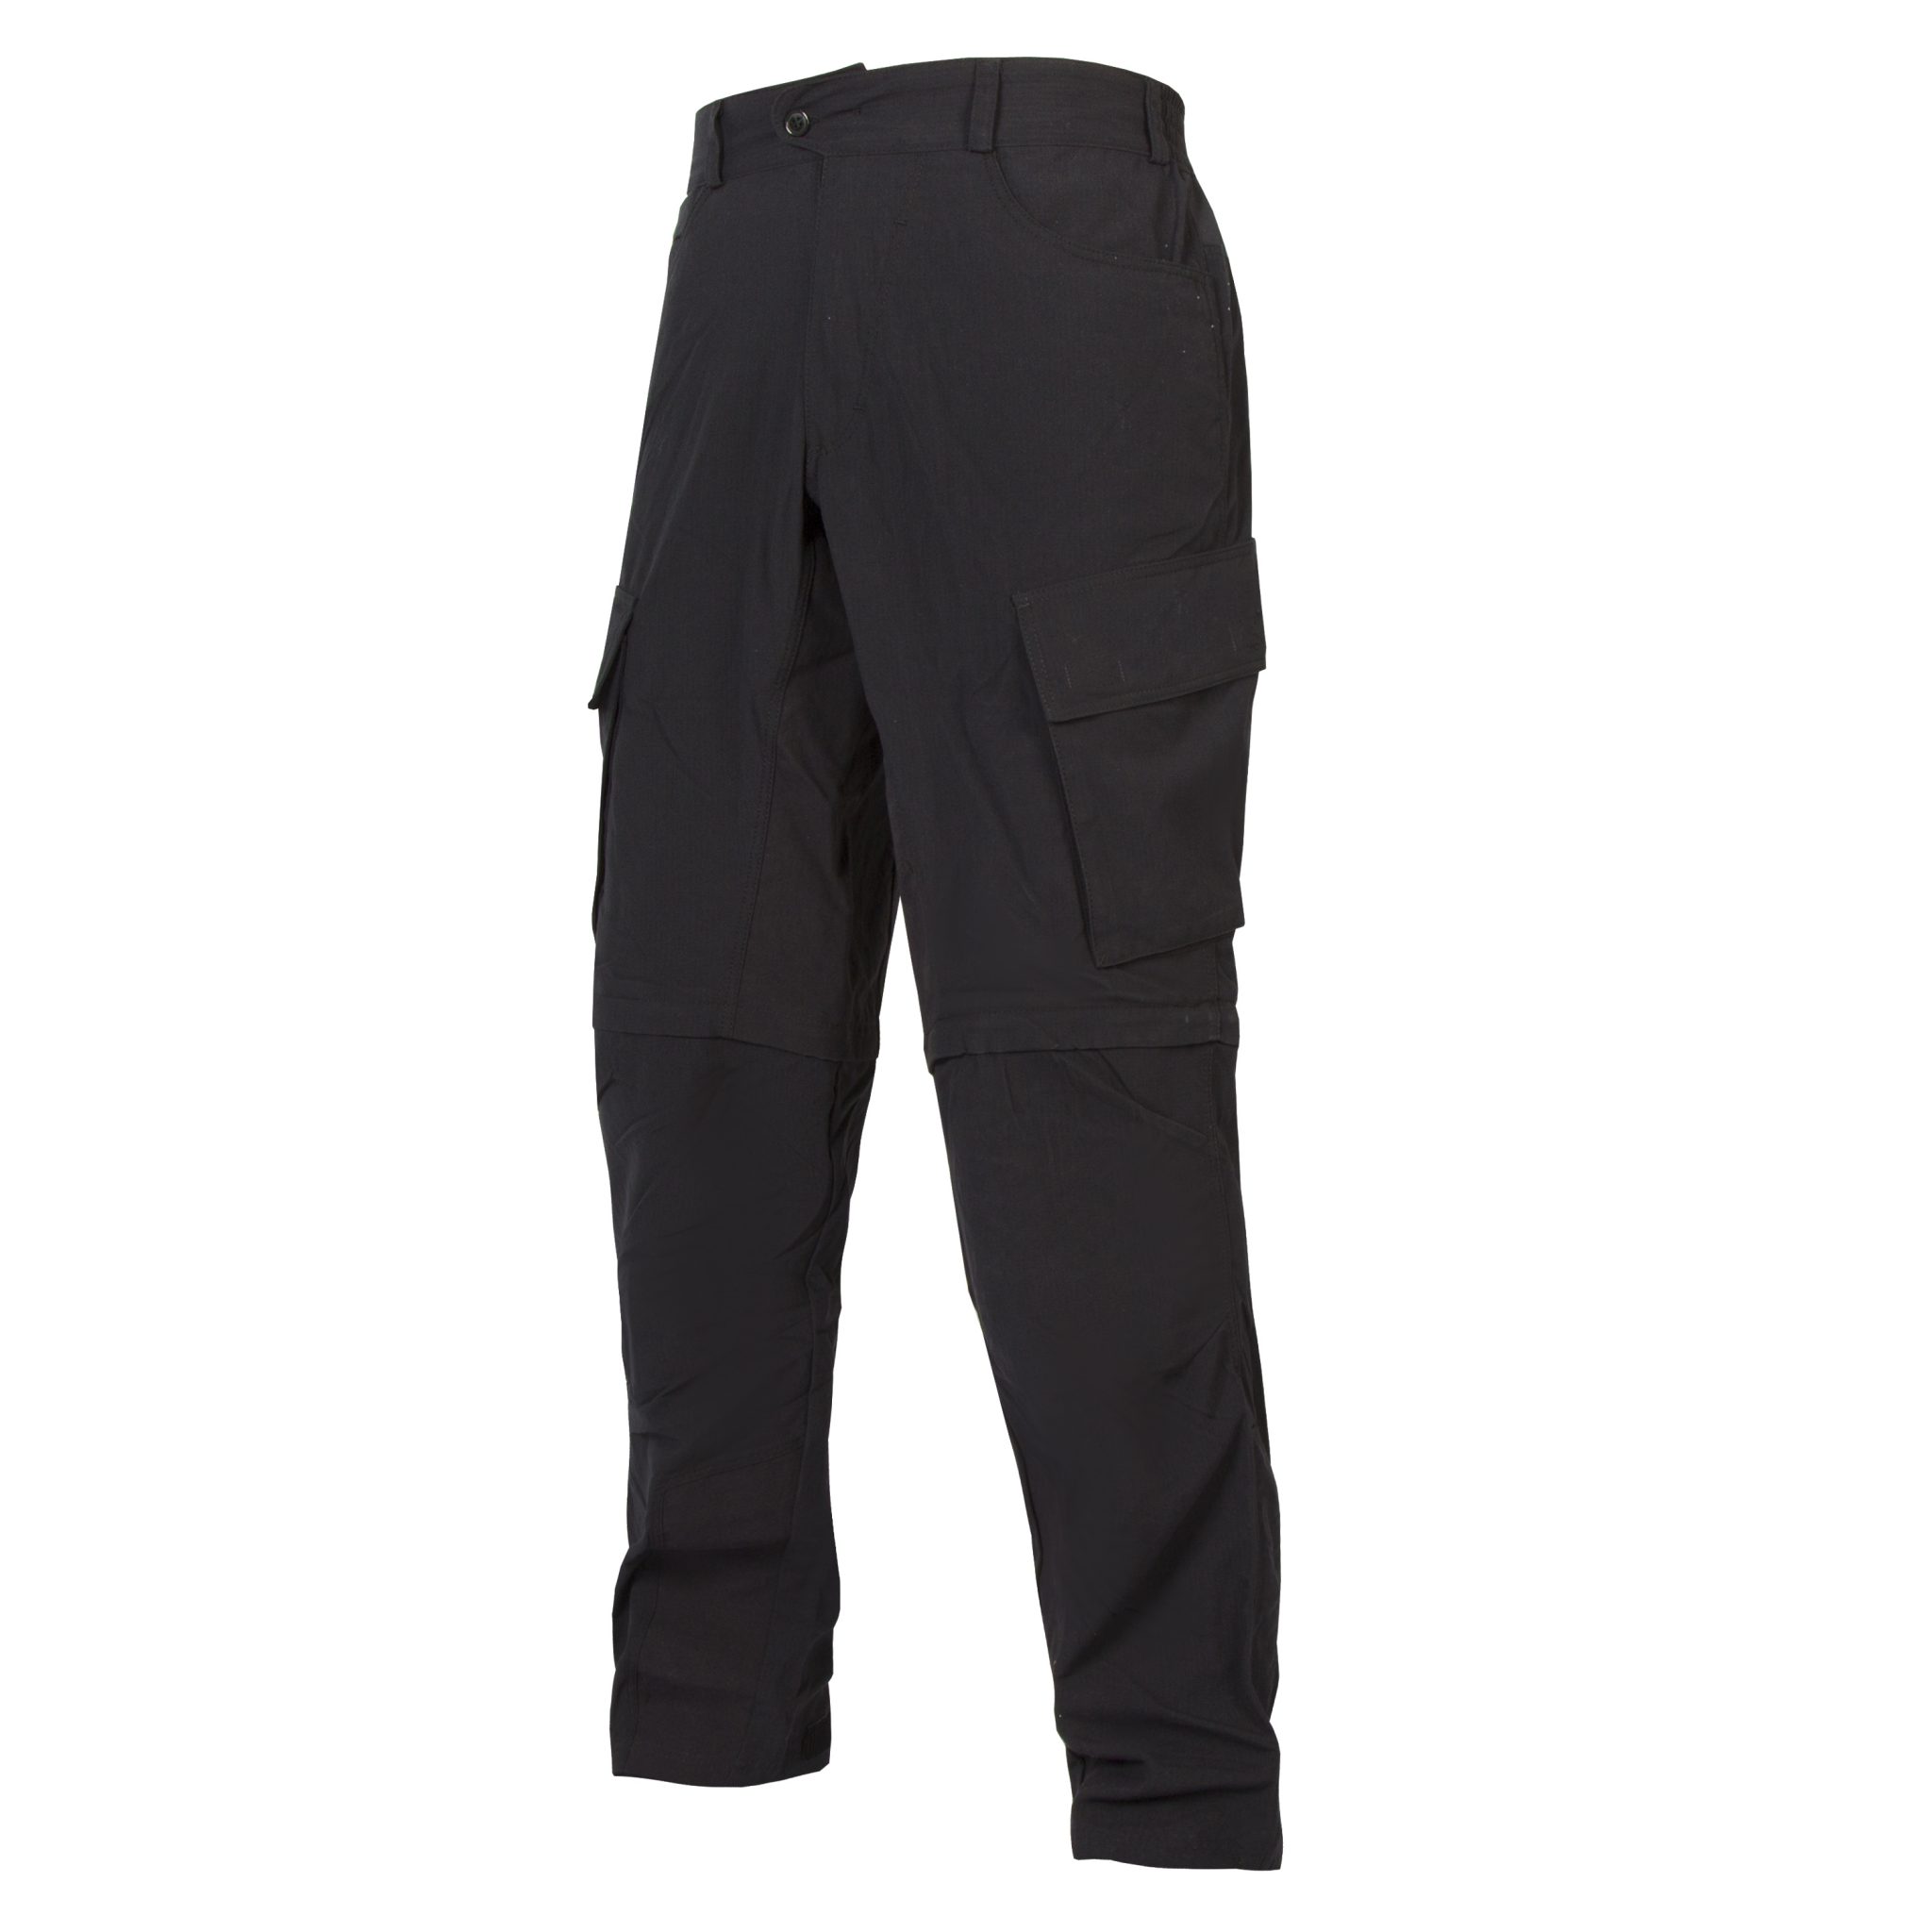 Police Uniform - Zip off trouser - Endura Uniforms